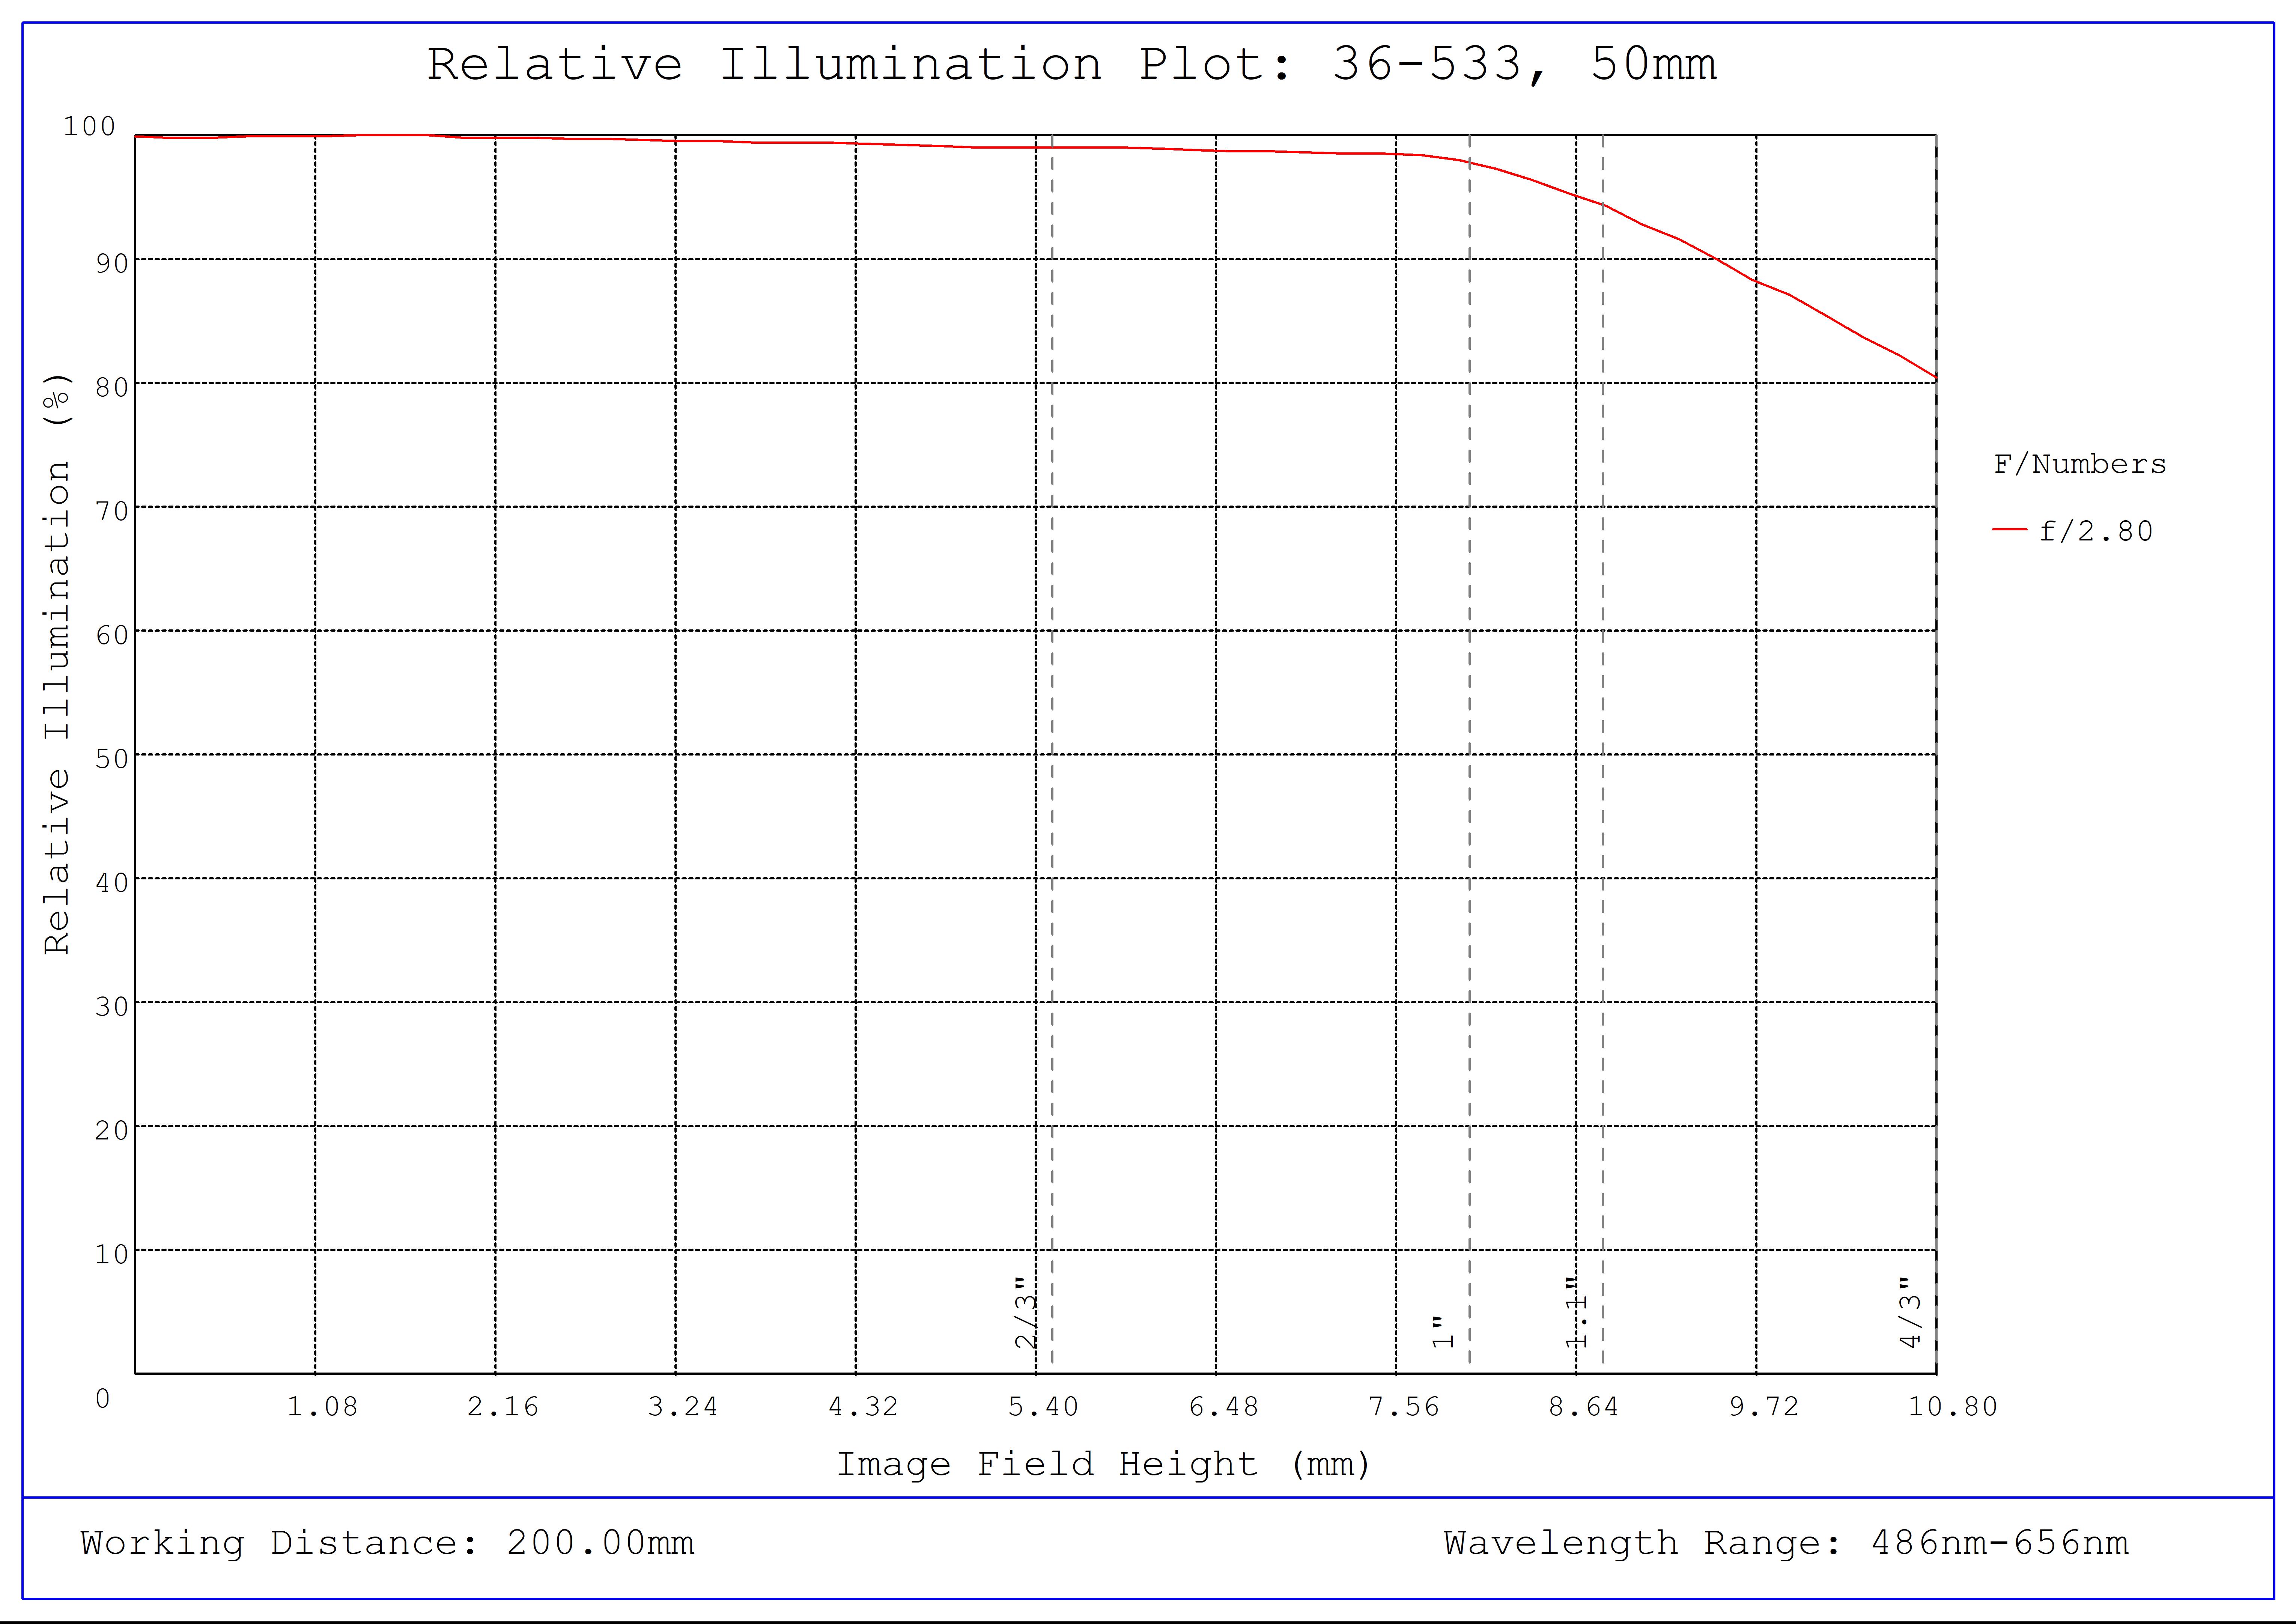 #36-533, 50mm f/2.8, HPr Series Fixed Focal Length Lens, Relative Illumination Plot